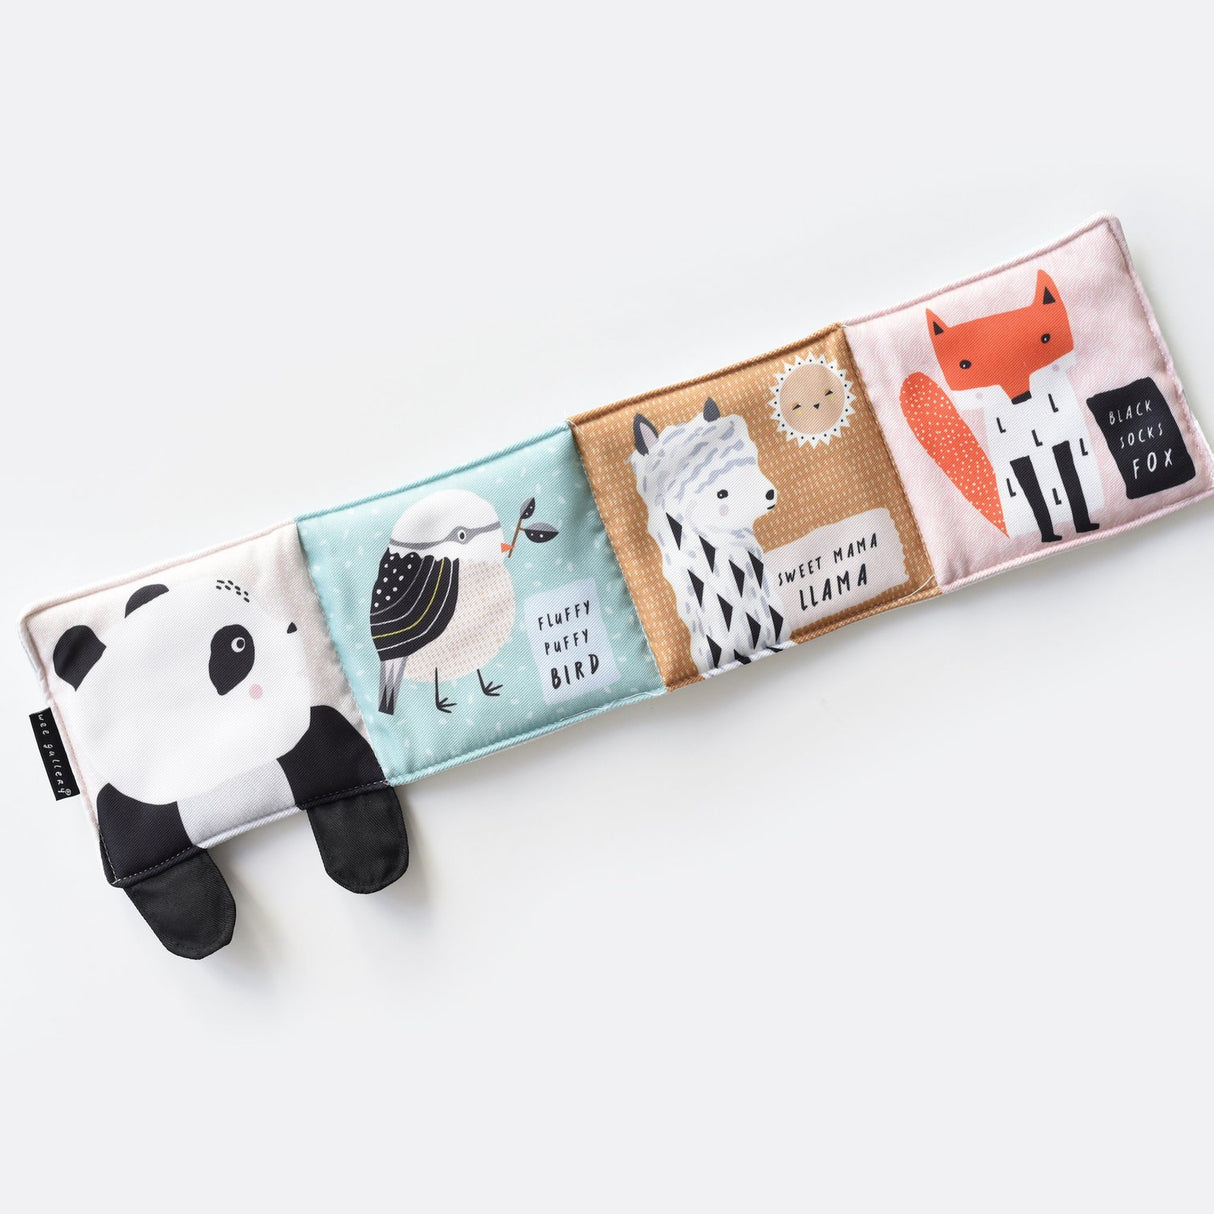 Baby's 1st Soft Book Panda